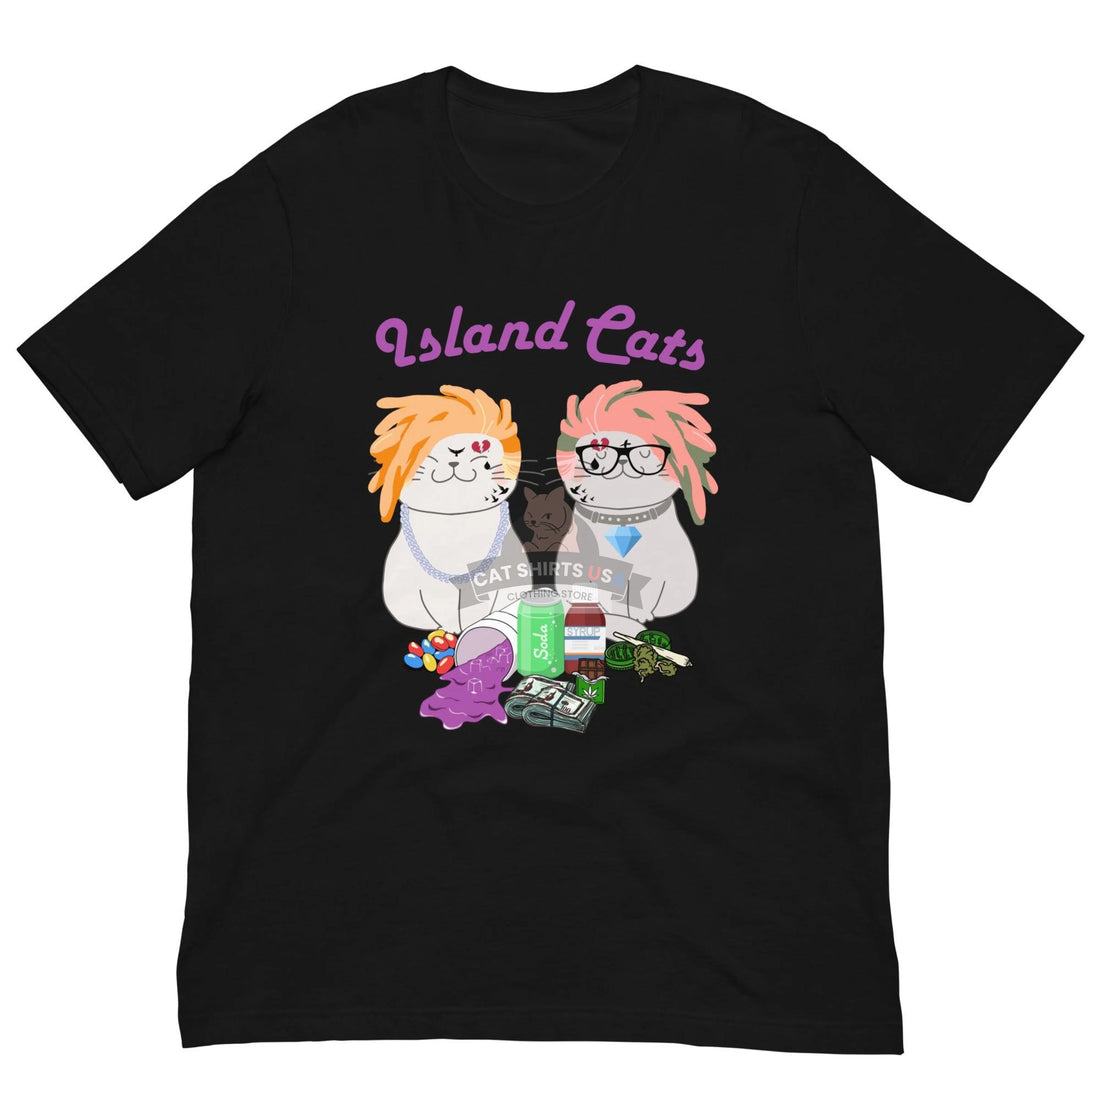 Island Cats Cat Shirt - Cat Shirts USA